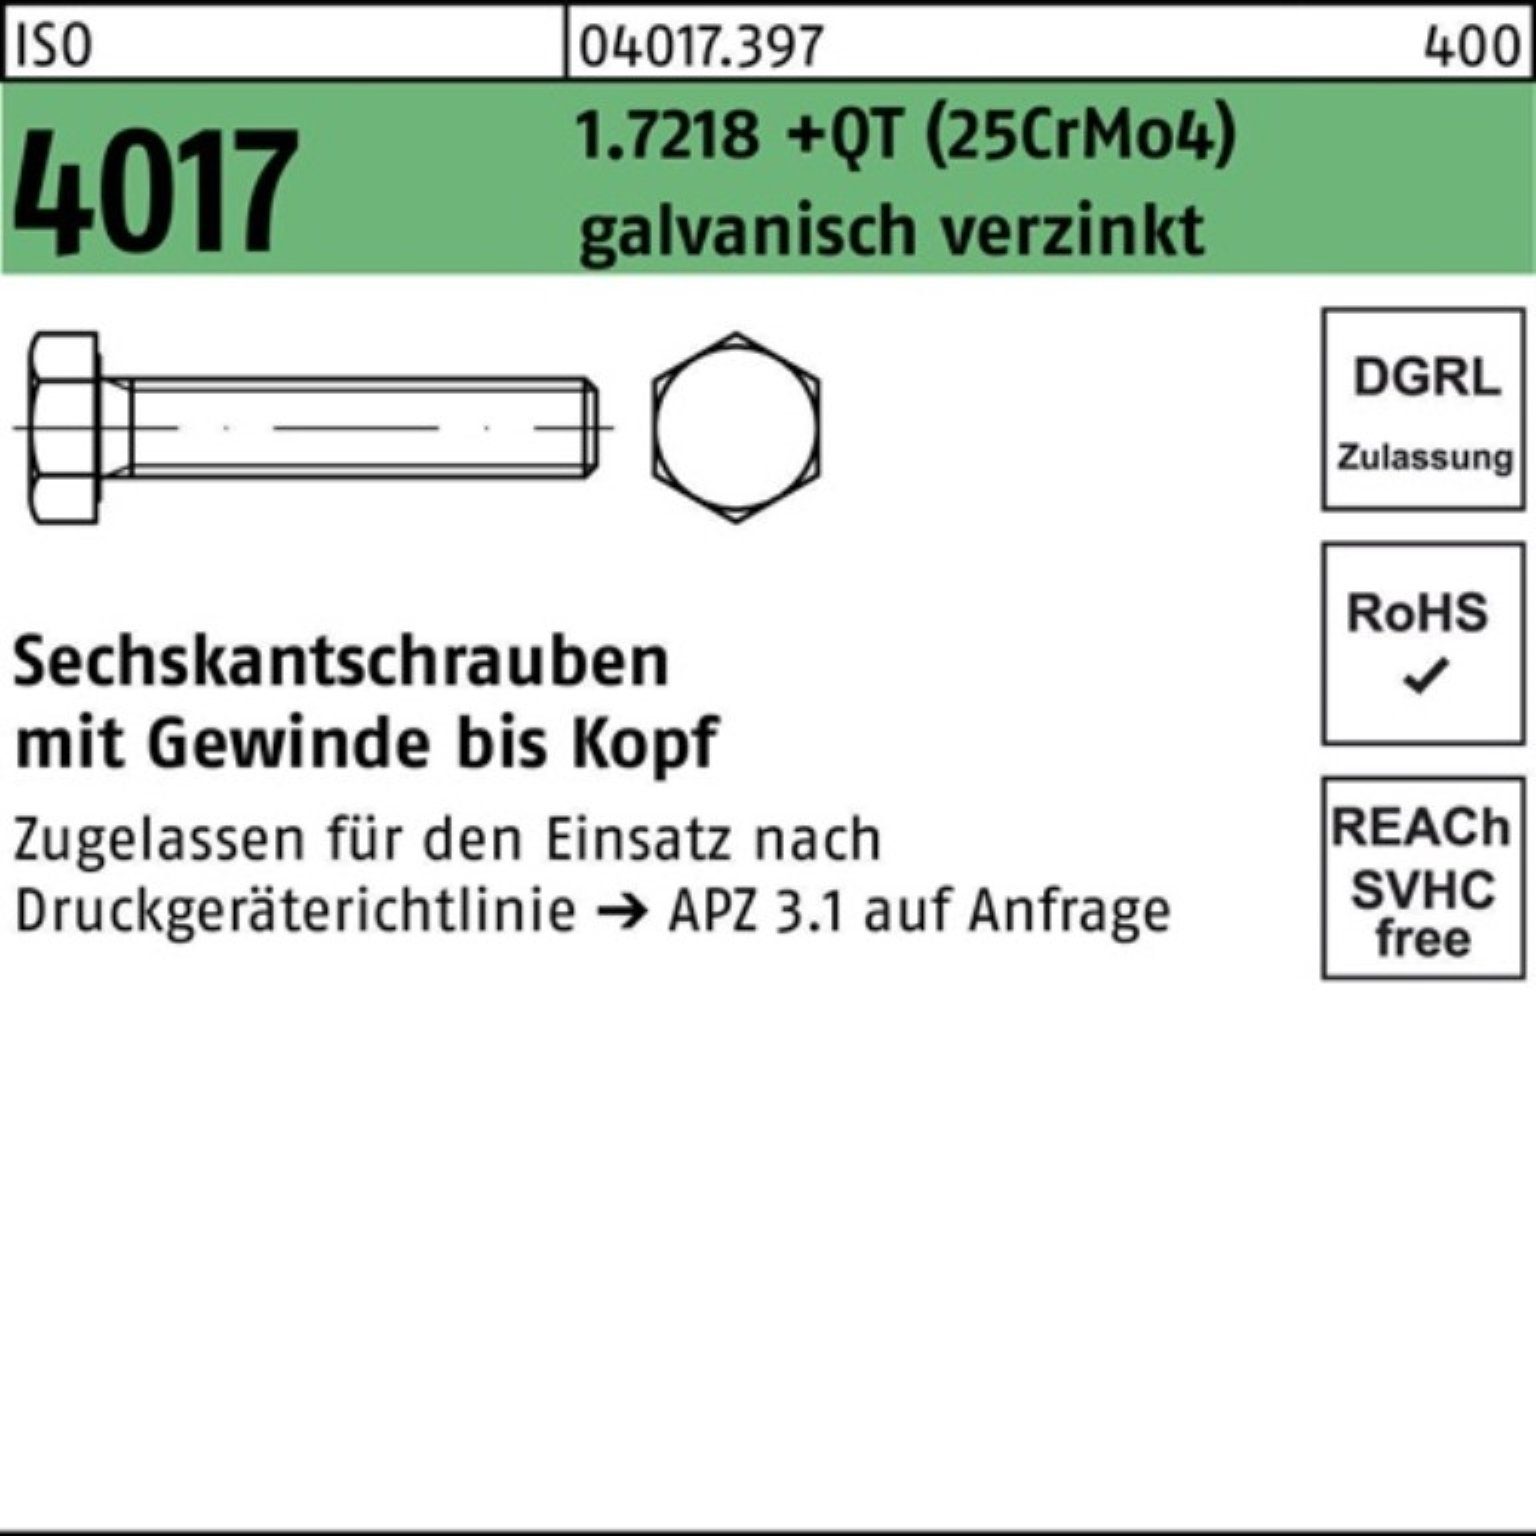 Sechskantschraube Sechskantschraube 1.7218 Bufab ISO 100er 4017 M12x60 +QT VG (25CrMo4) g Pack